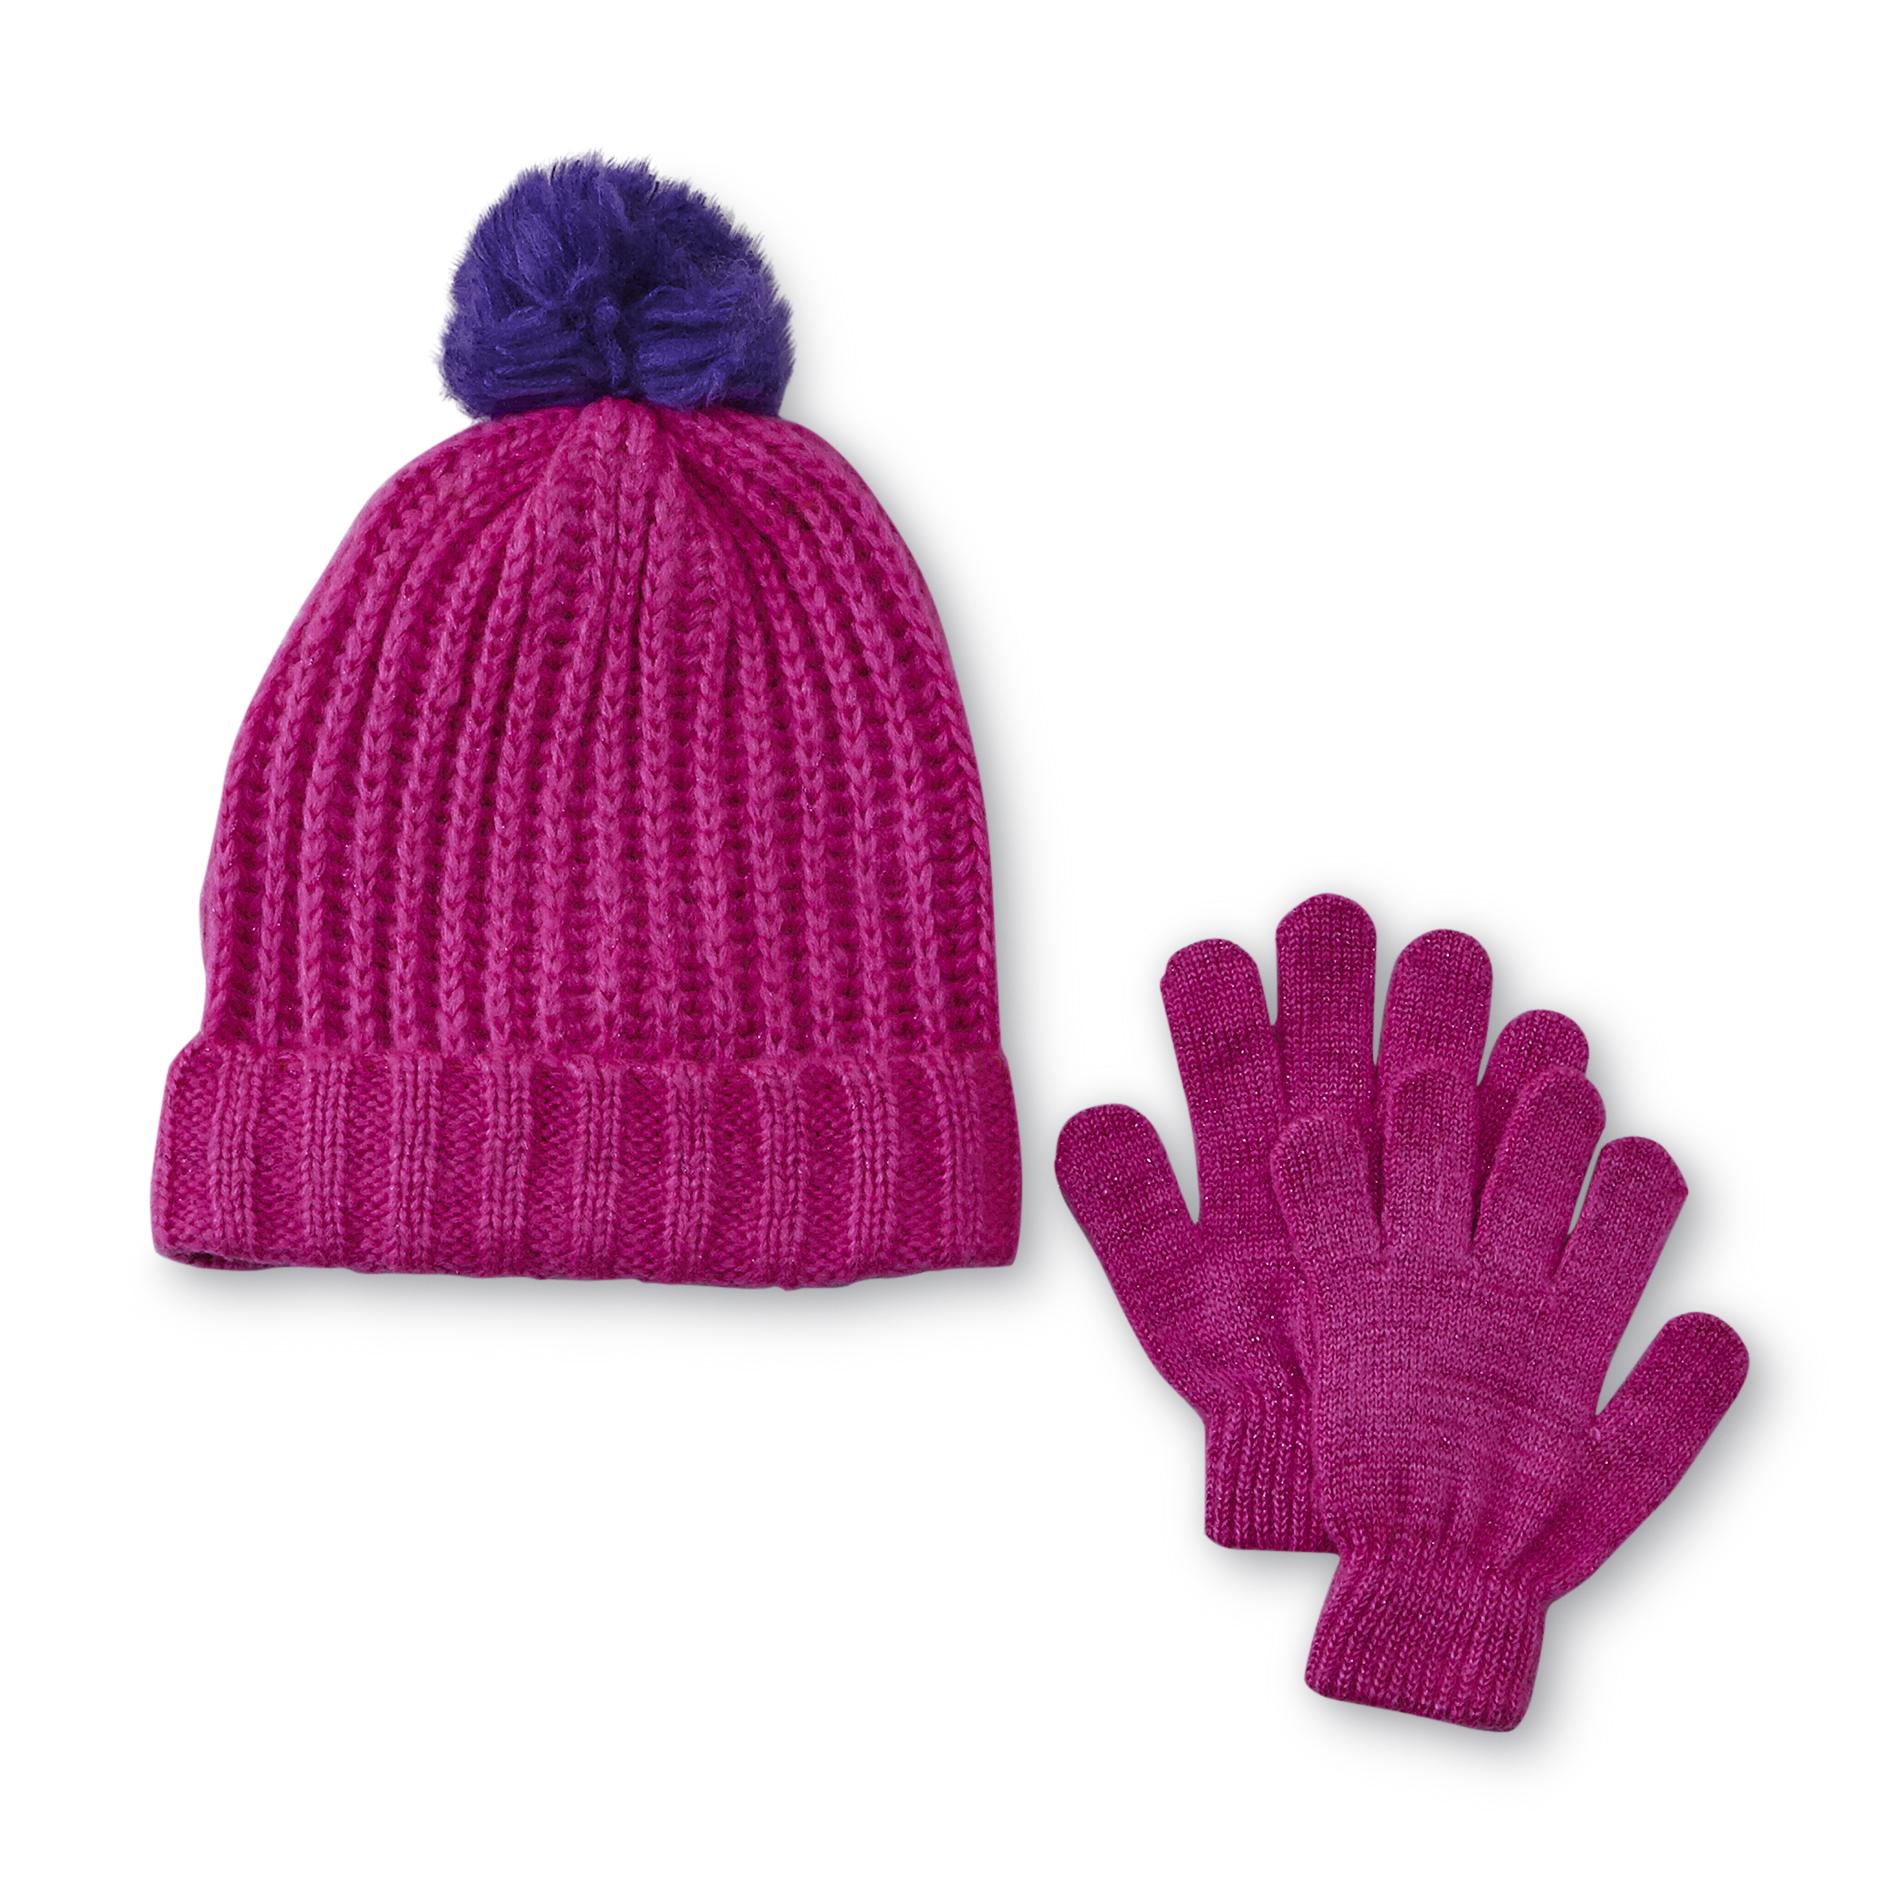 Toby Girl's Knit Hat & Gloves